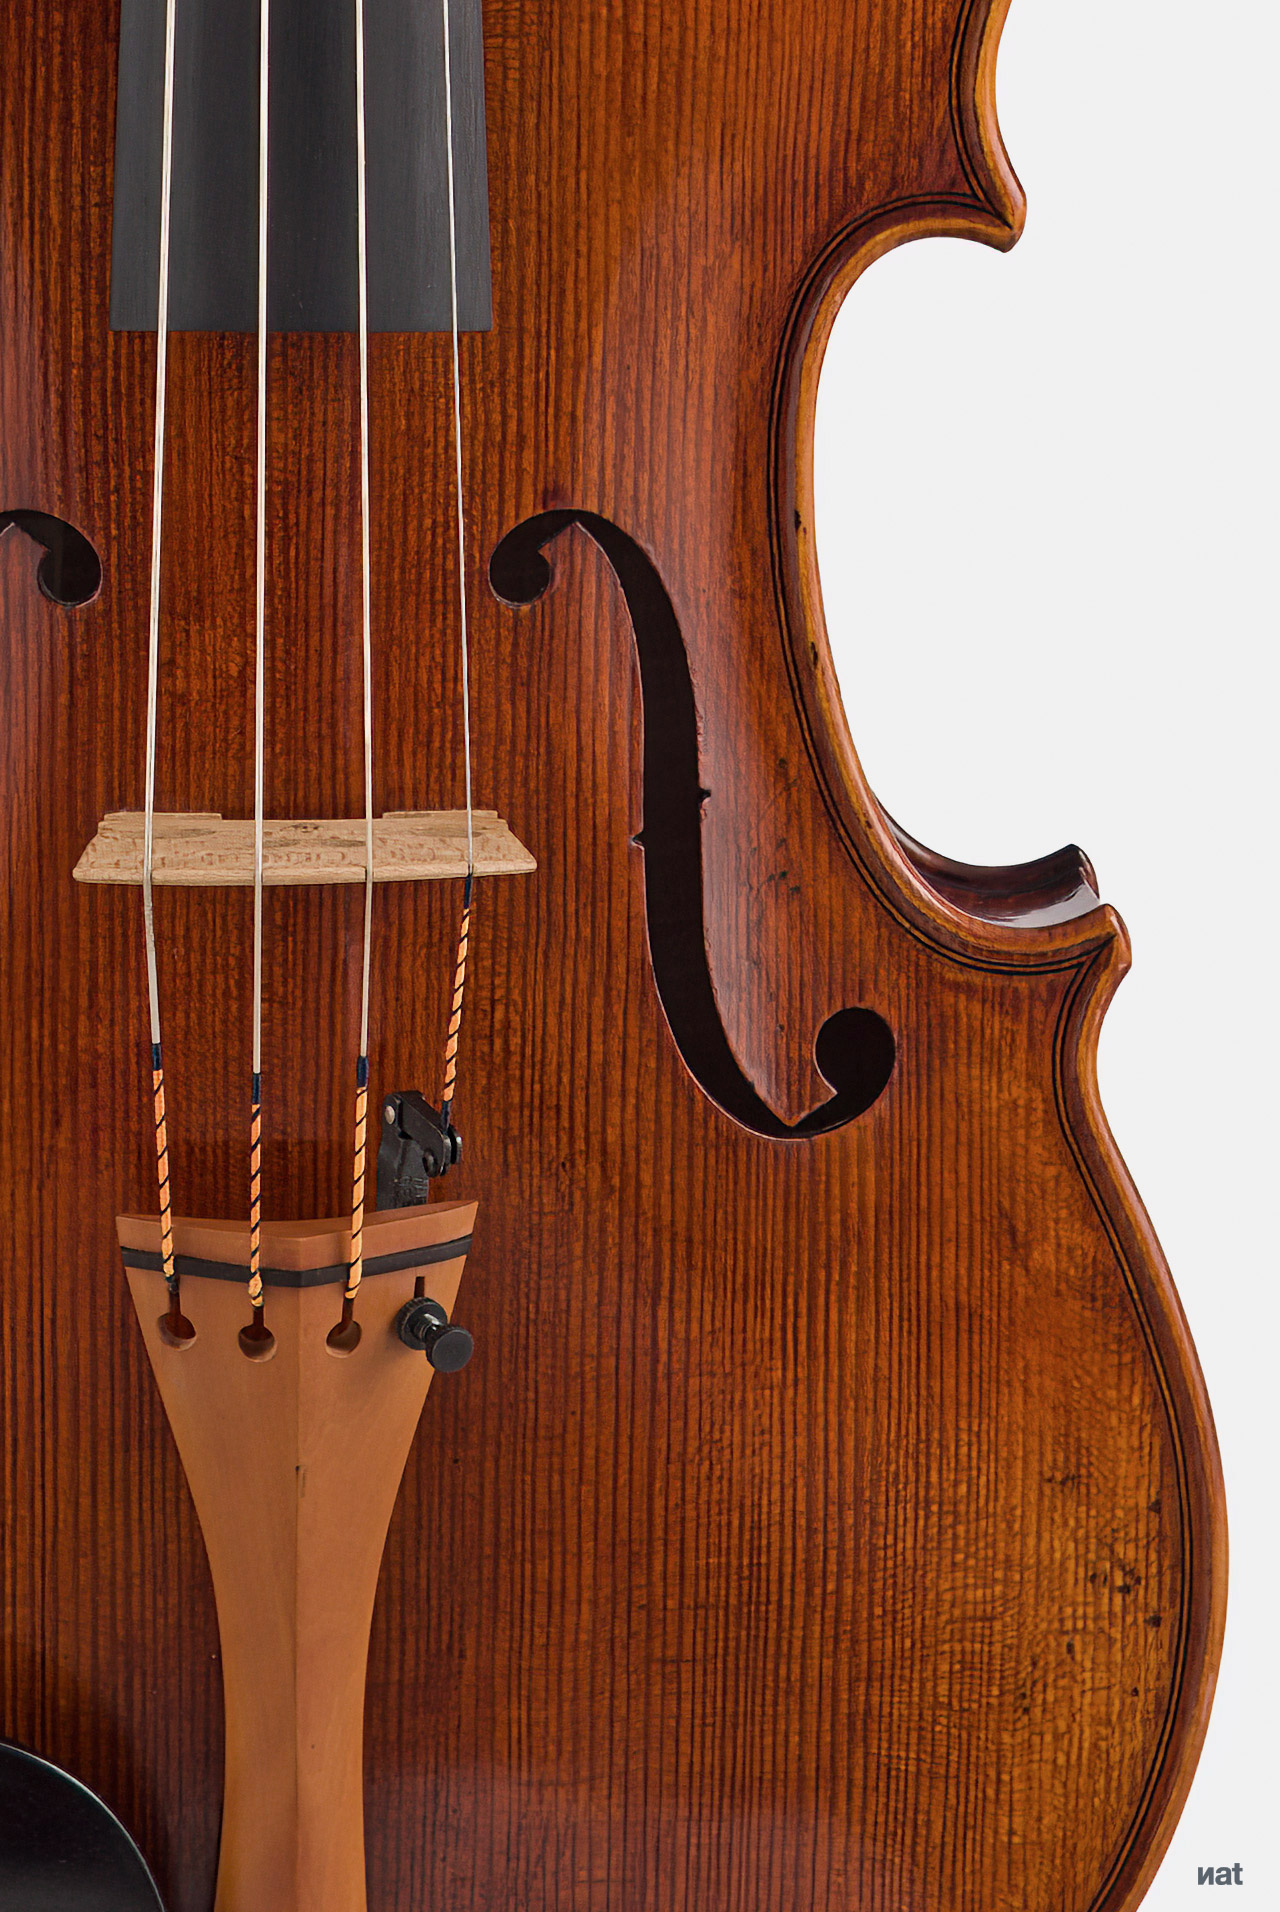 Detalle de un violín